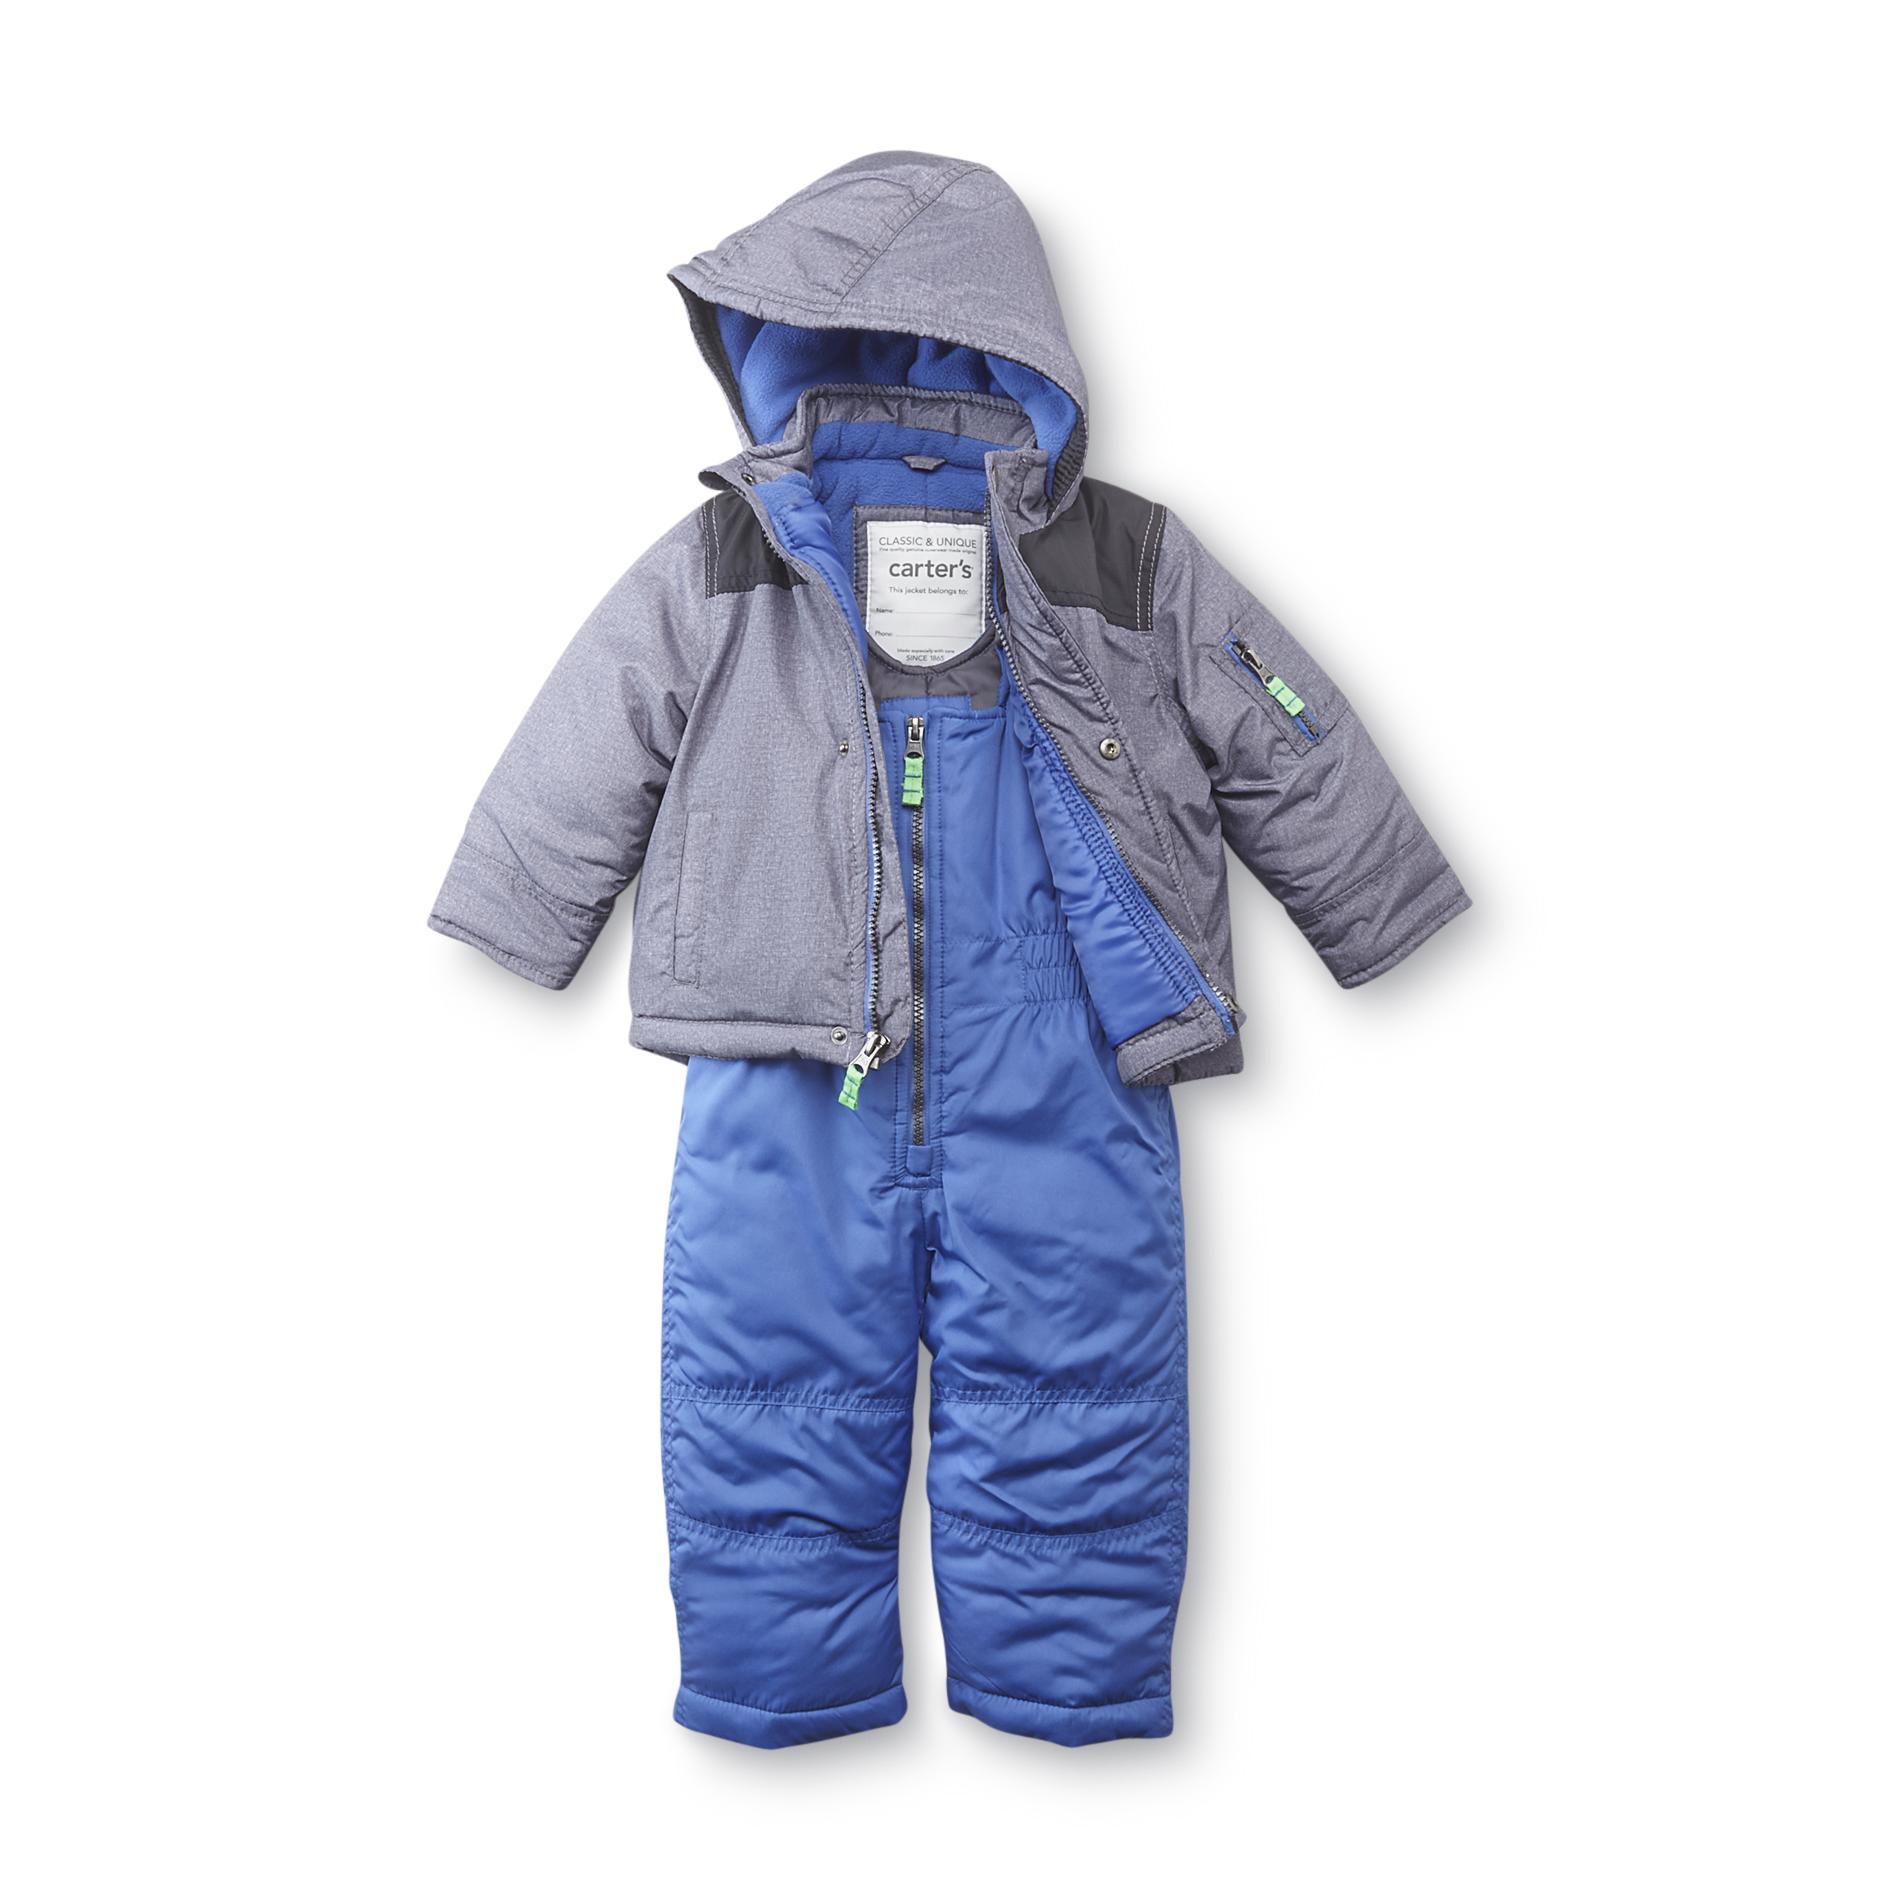 Carter's Infant & Toddler Boy's Snowsuit